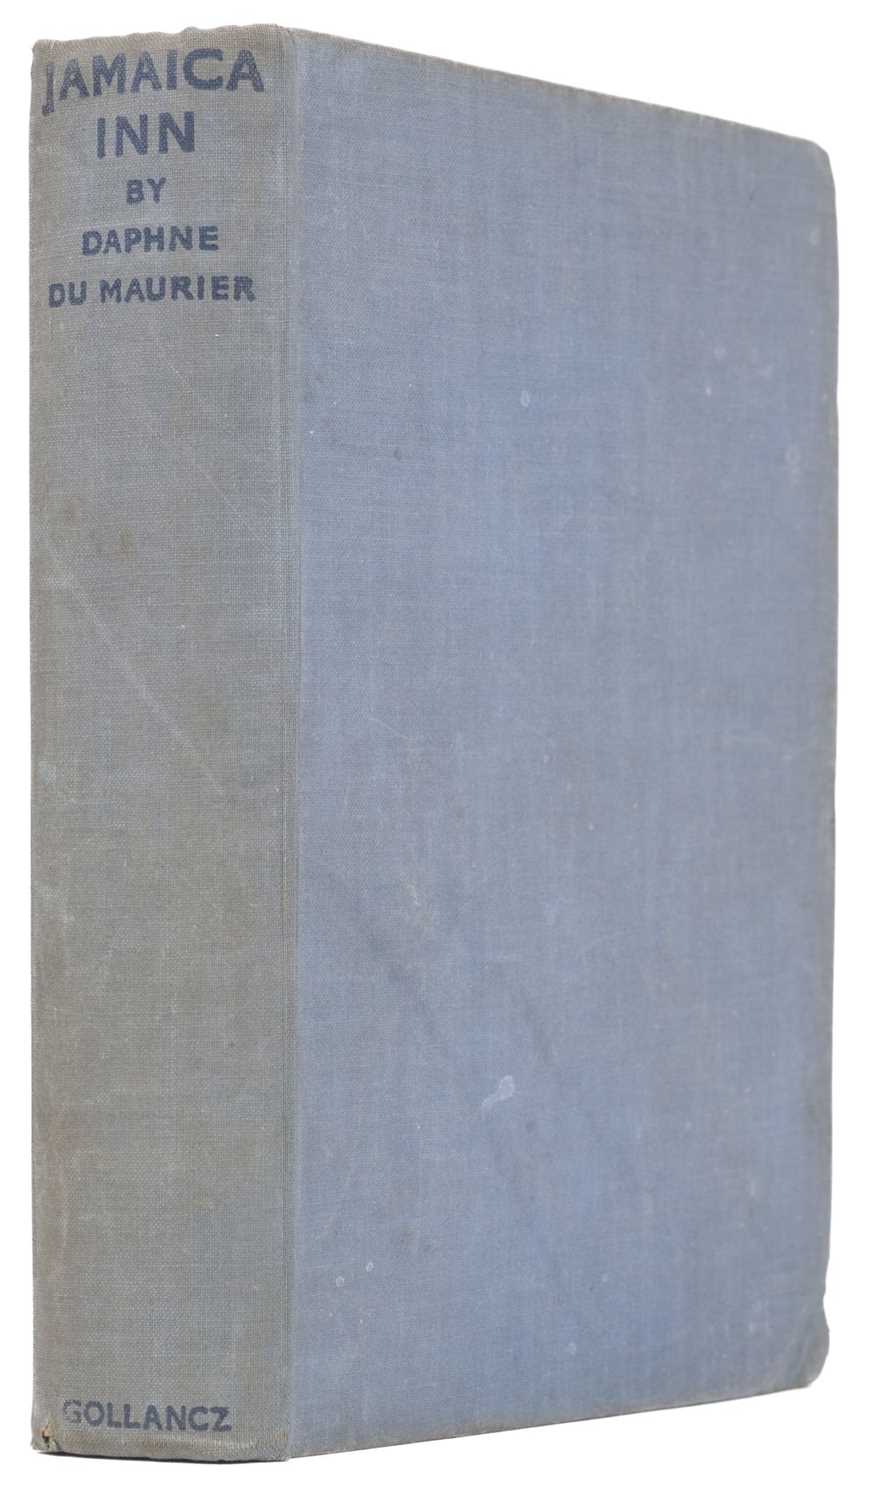 Lot 833 - 1936. Du Maurier (Daphne). Jamaica Inn, 1st edition, London: Victor Gollancz, 1936